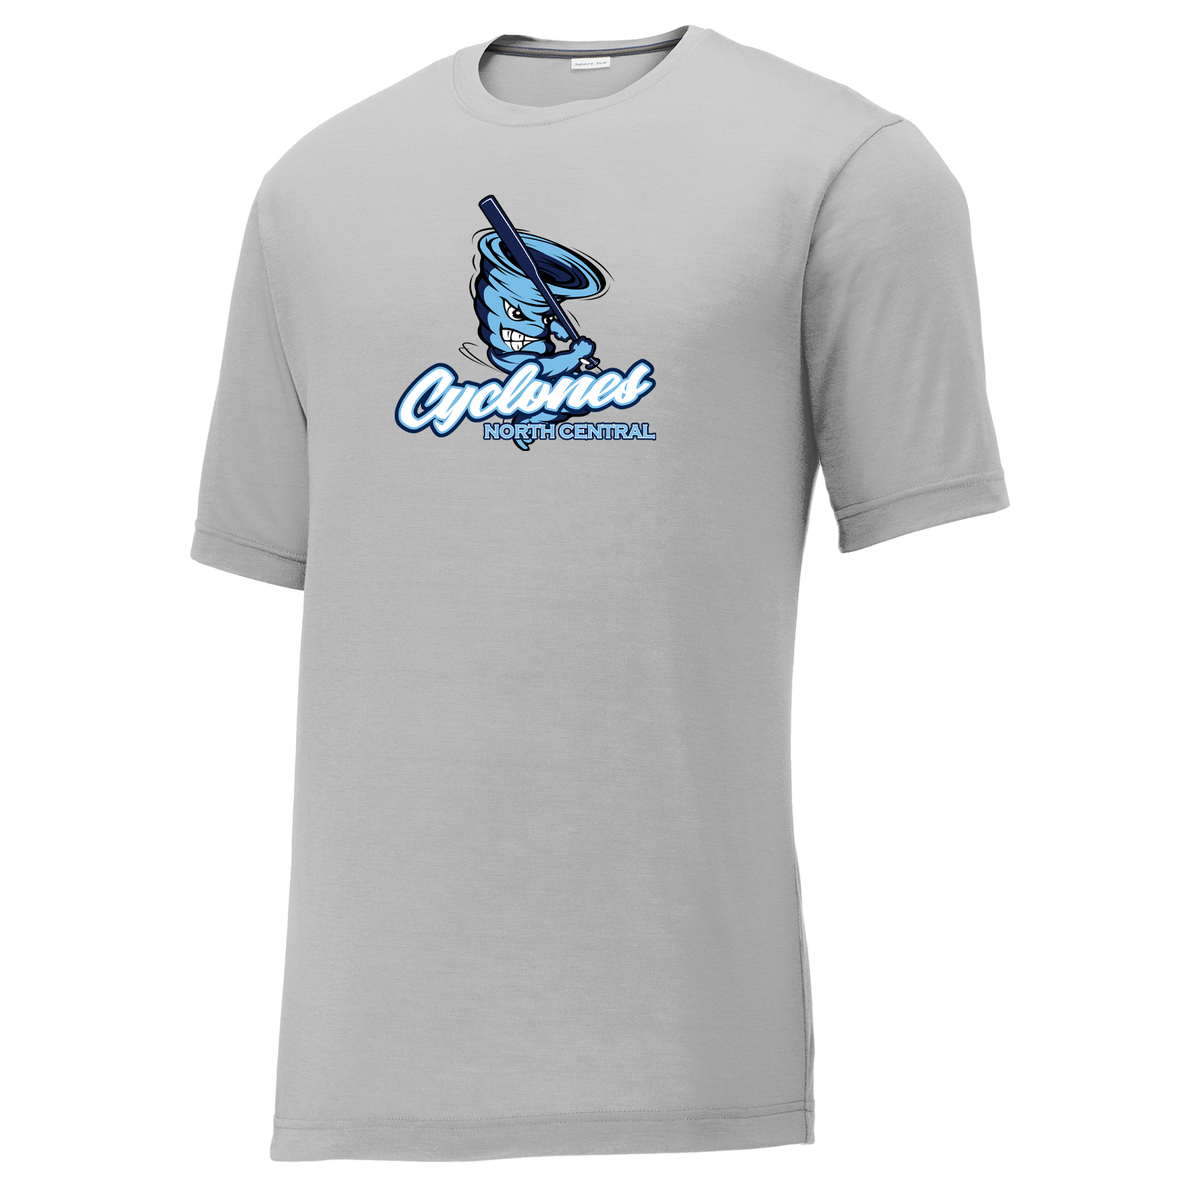 Cyclones Baseball CottonTouch Performance T-Shirt